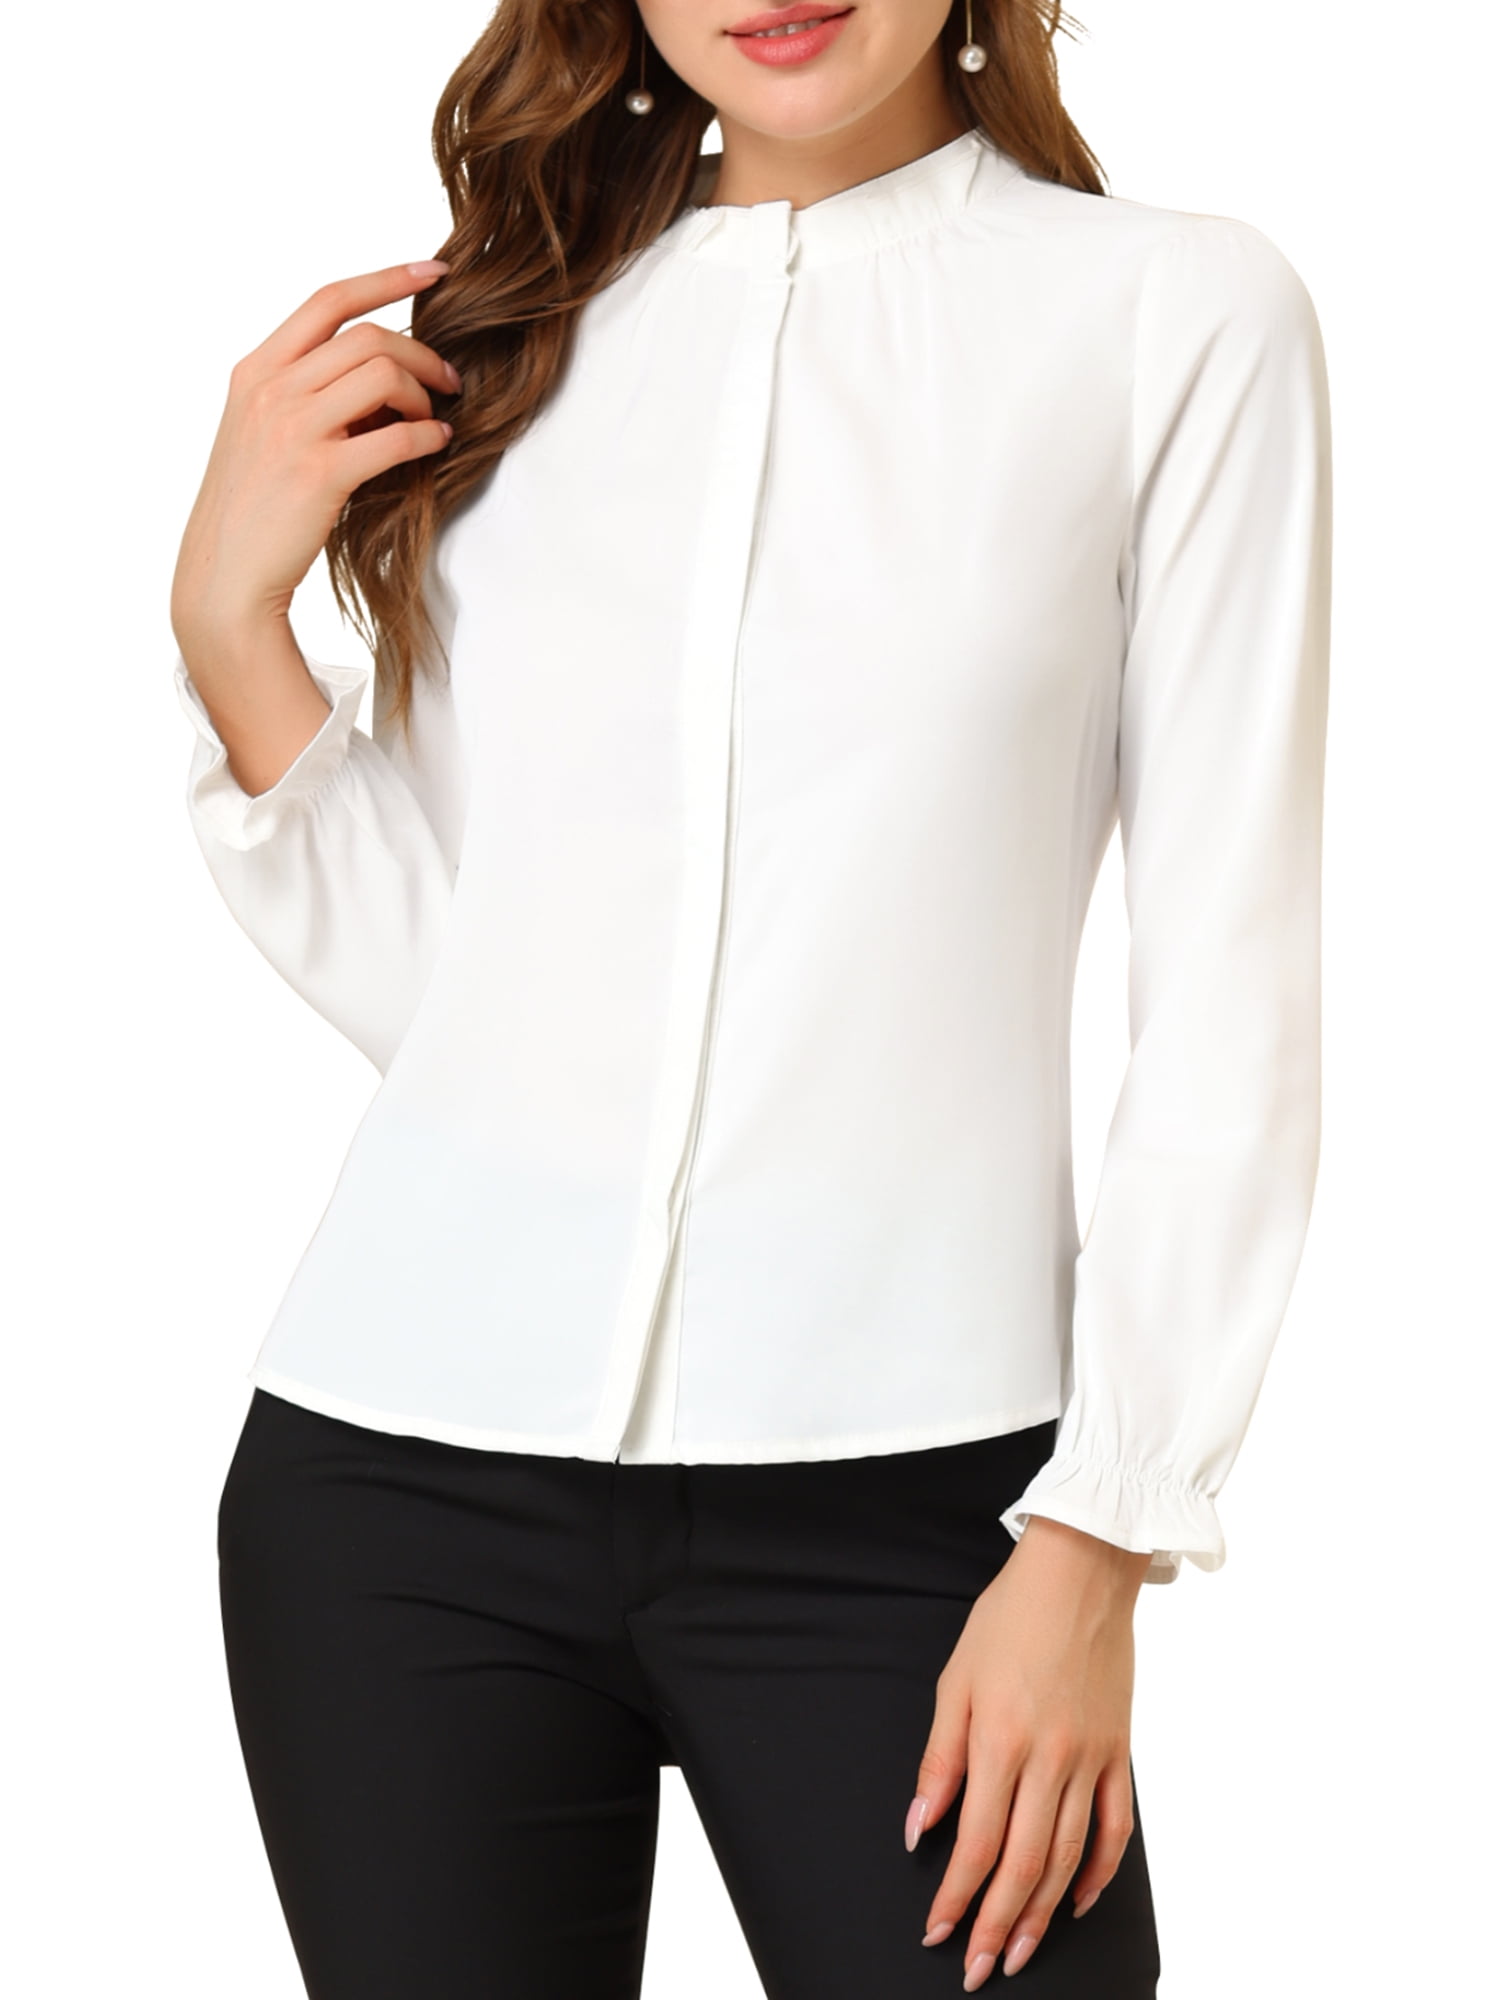 Allegra K Women's Point Collar Long Sleeve Button Down Floral Shirt Black  Small